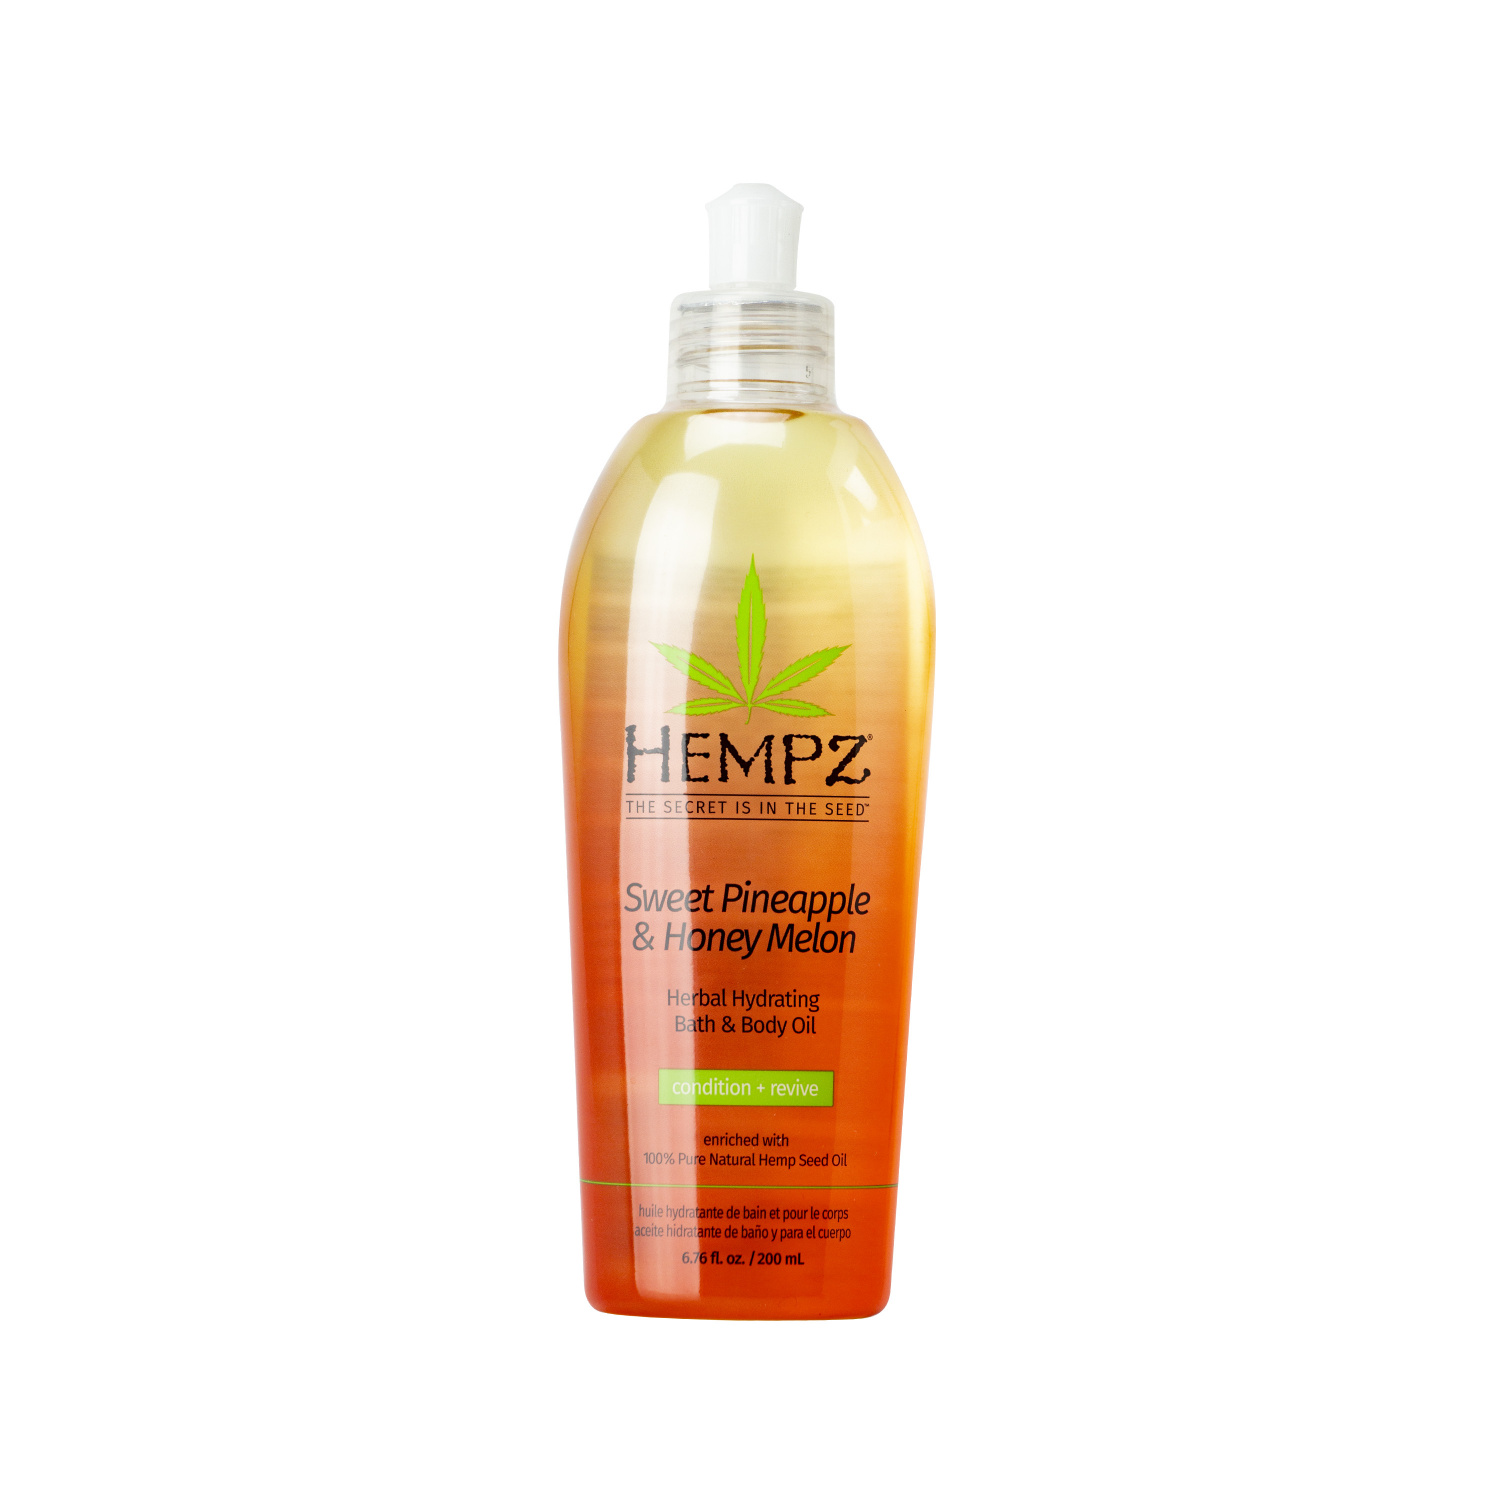 Hempz Sweet Pineapple & Honey Melon Herbal Hydrating Bath & Body Oil 200ml - интернет-магазин профессиональной косметики Spadream, изображение 36705